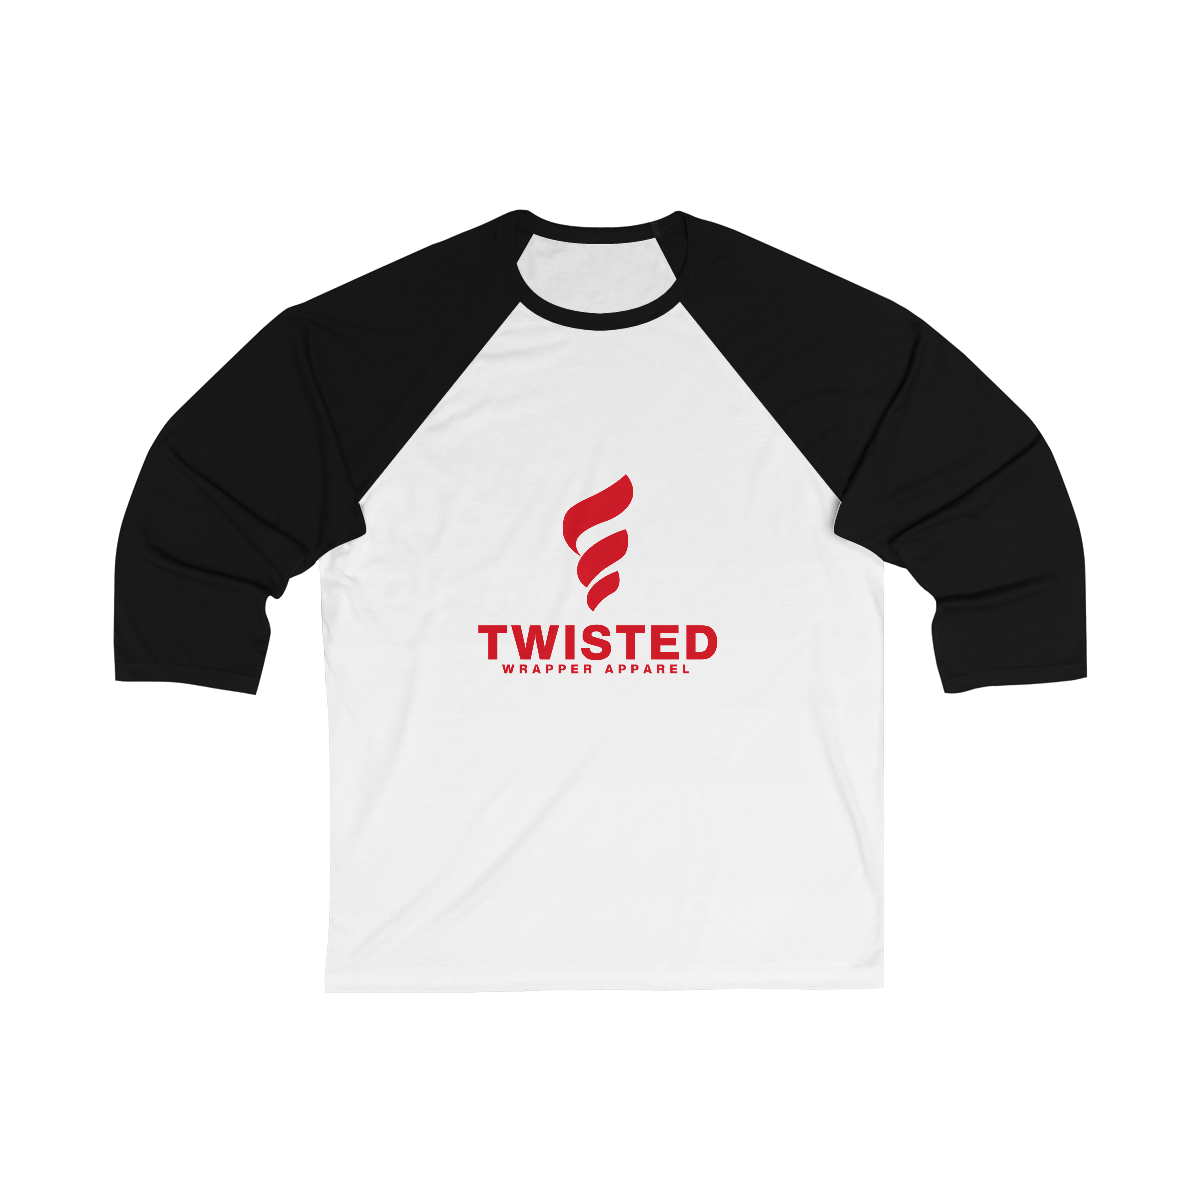 Unisex 3 Sleeve Baseball Tee - TwistedWrapper